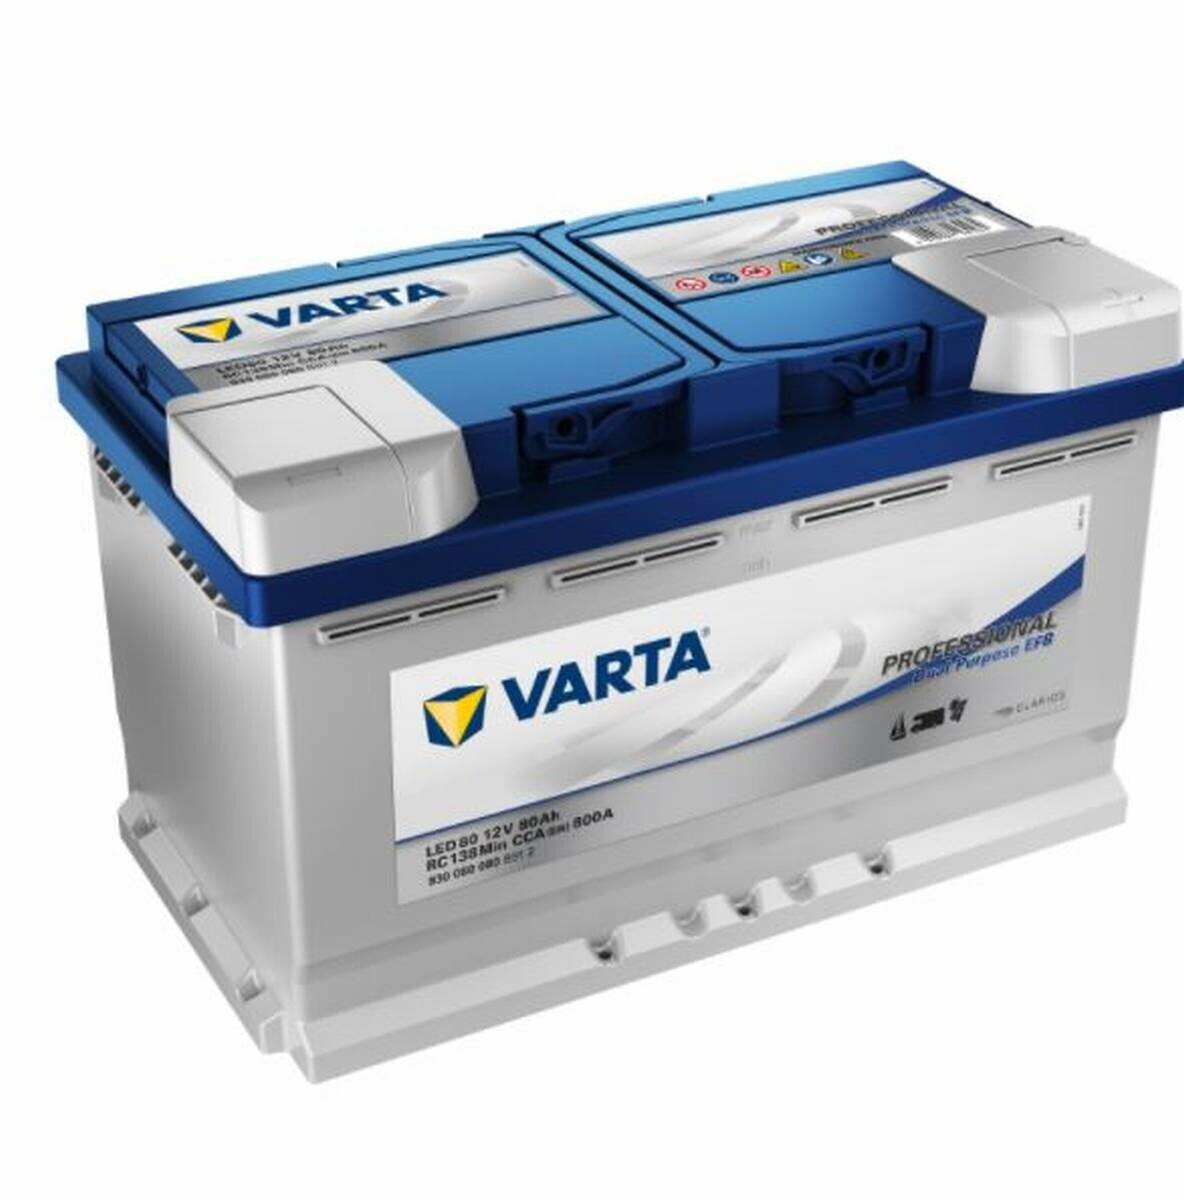 VARTA LED 80 Professional DP 930 12V 80Ah ab 142,80 €